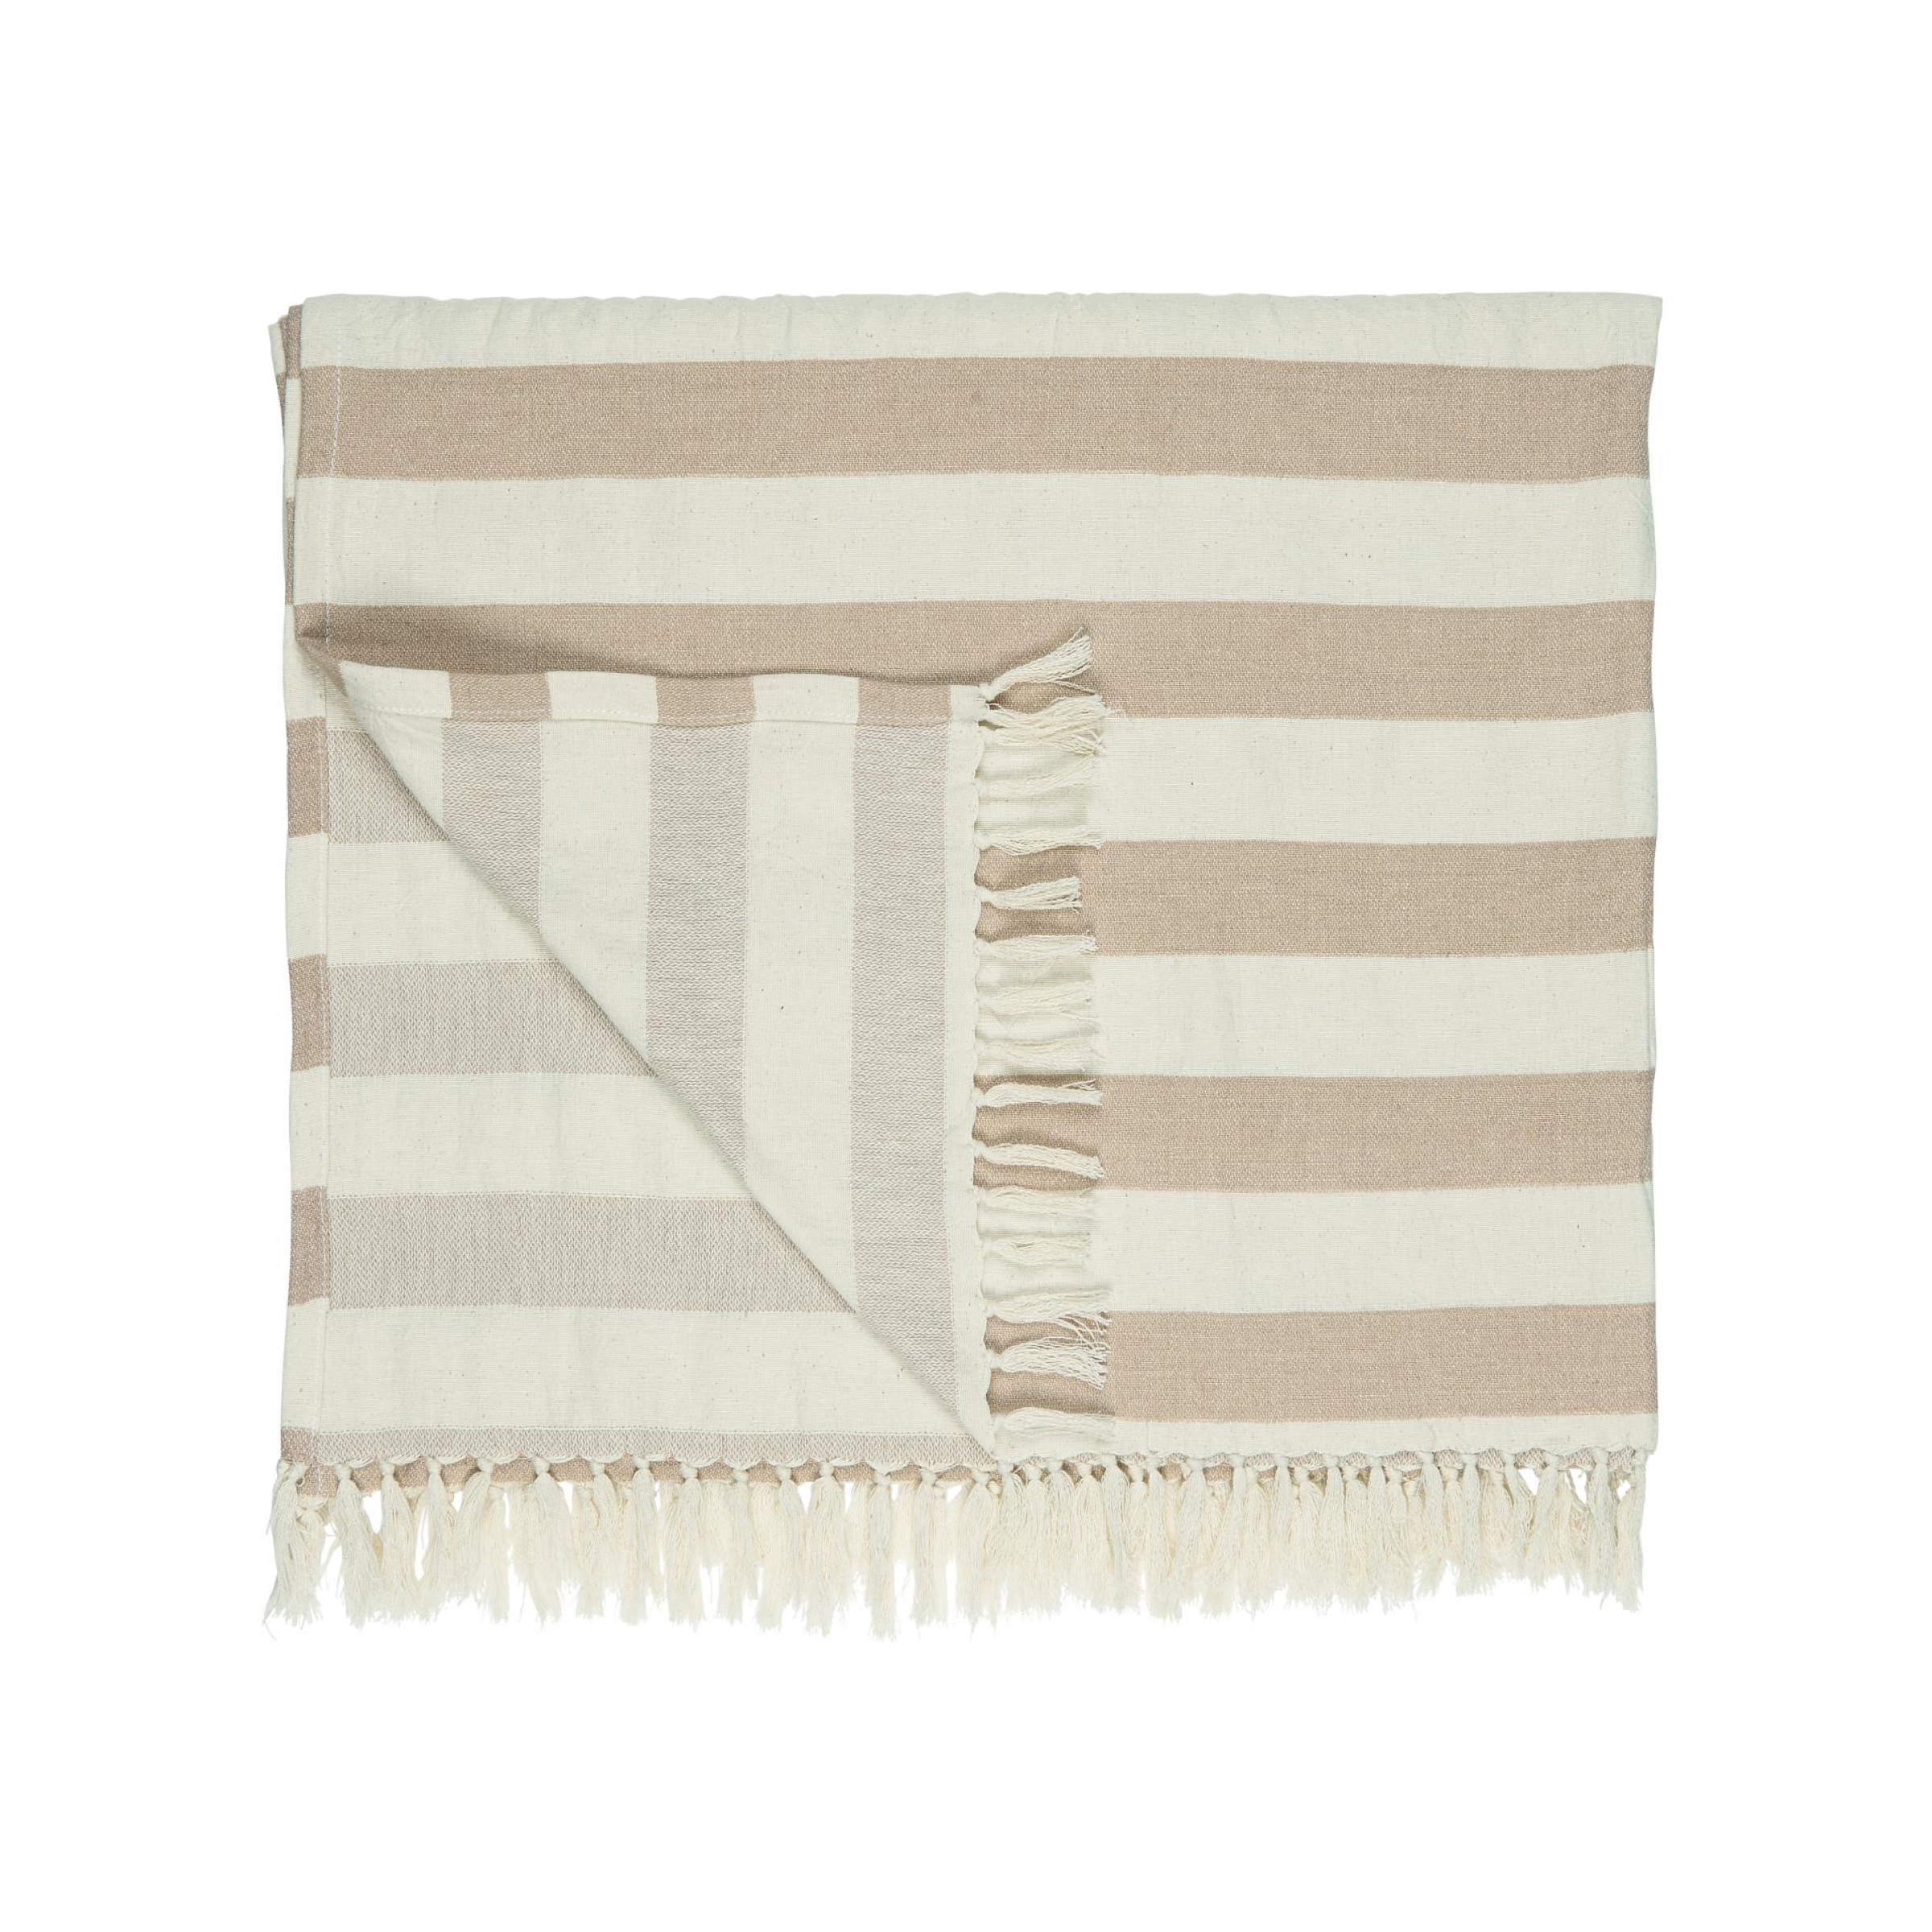 Ib Laursen Hammam towel with Fringes - Burnt Rose Stripes